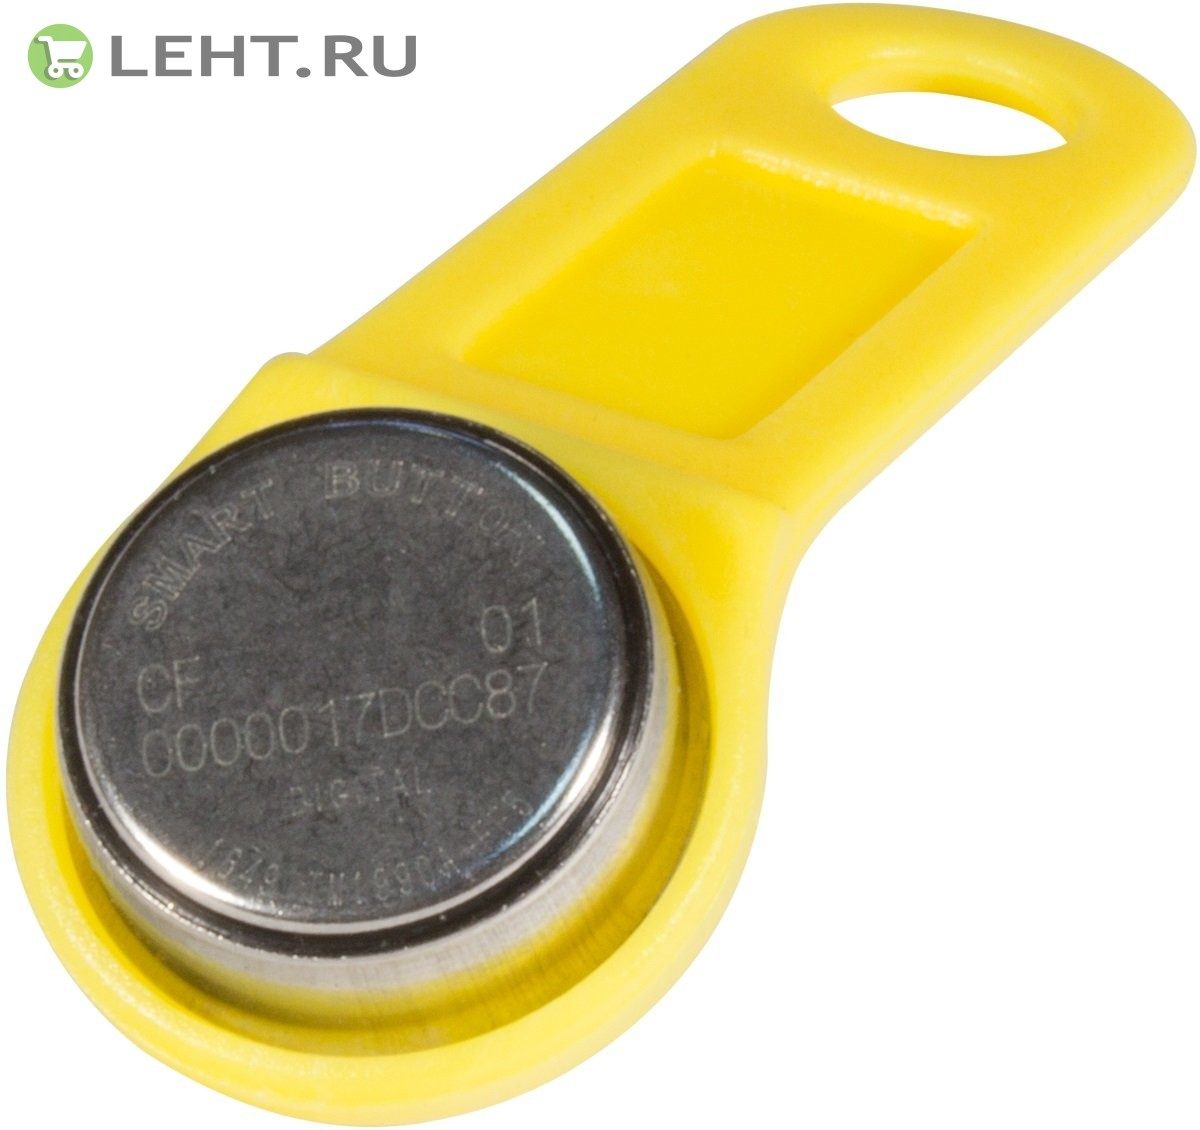 Ключ SB 1990 A TouchMemory (желтый): Ключ электронный Touch Memory с держателем